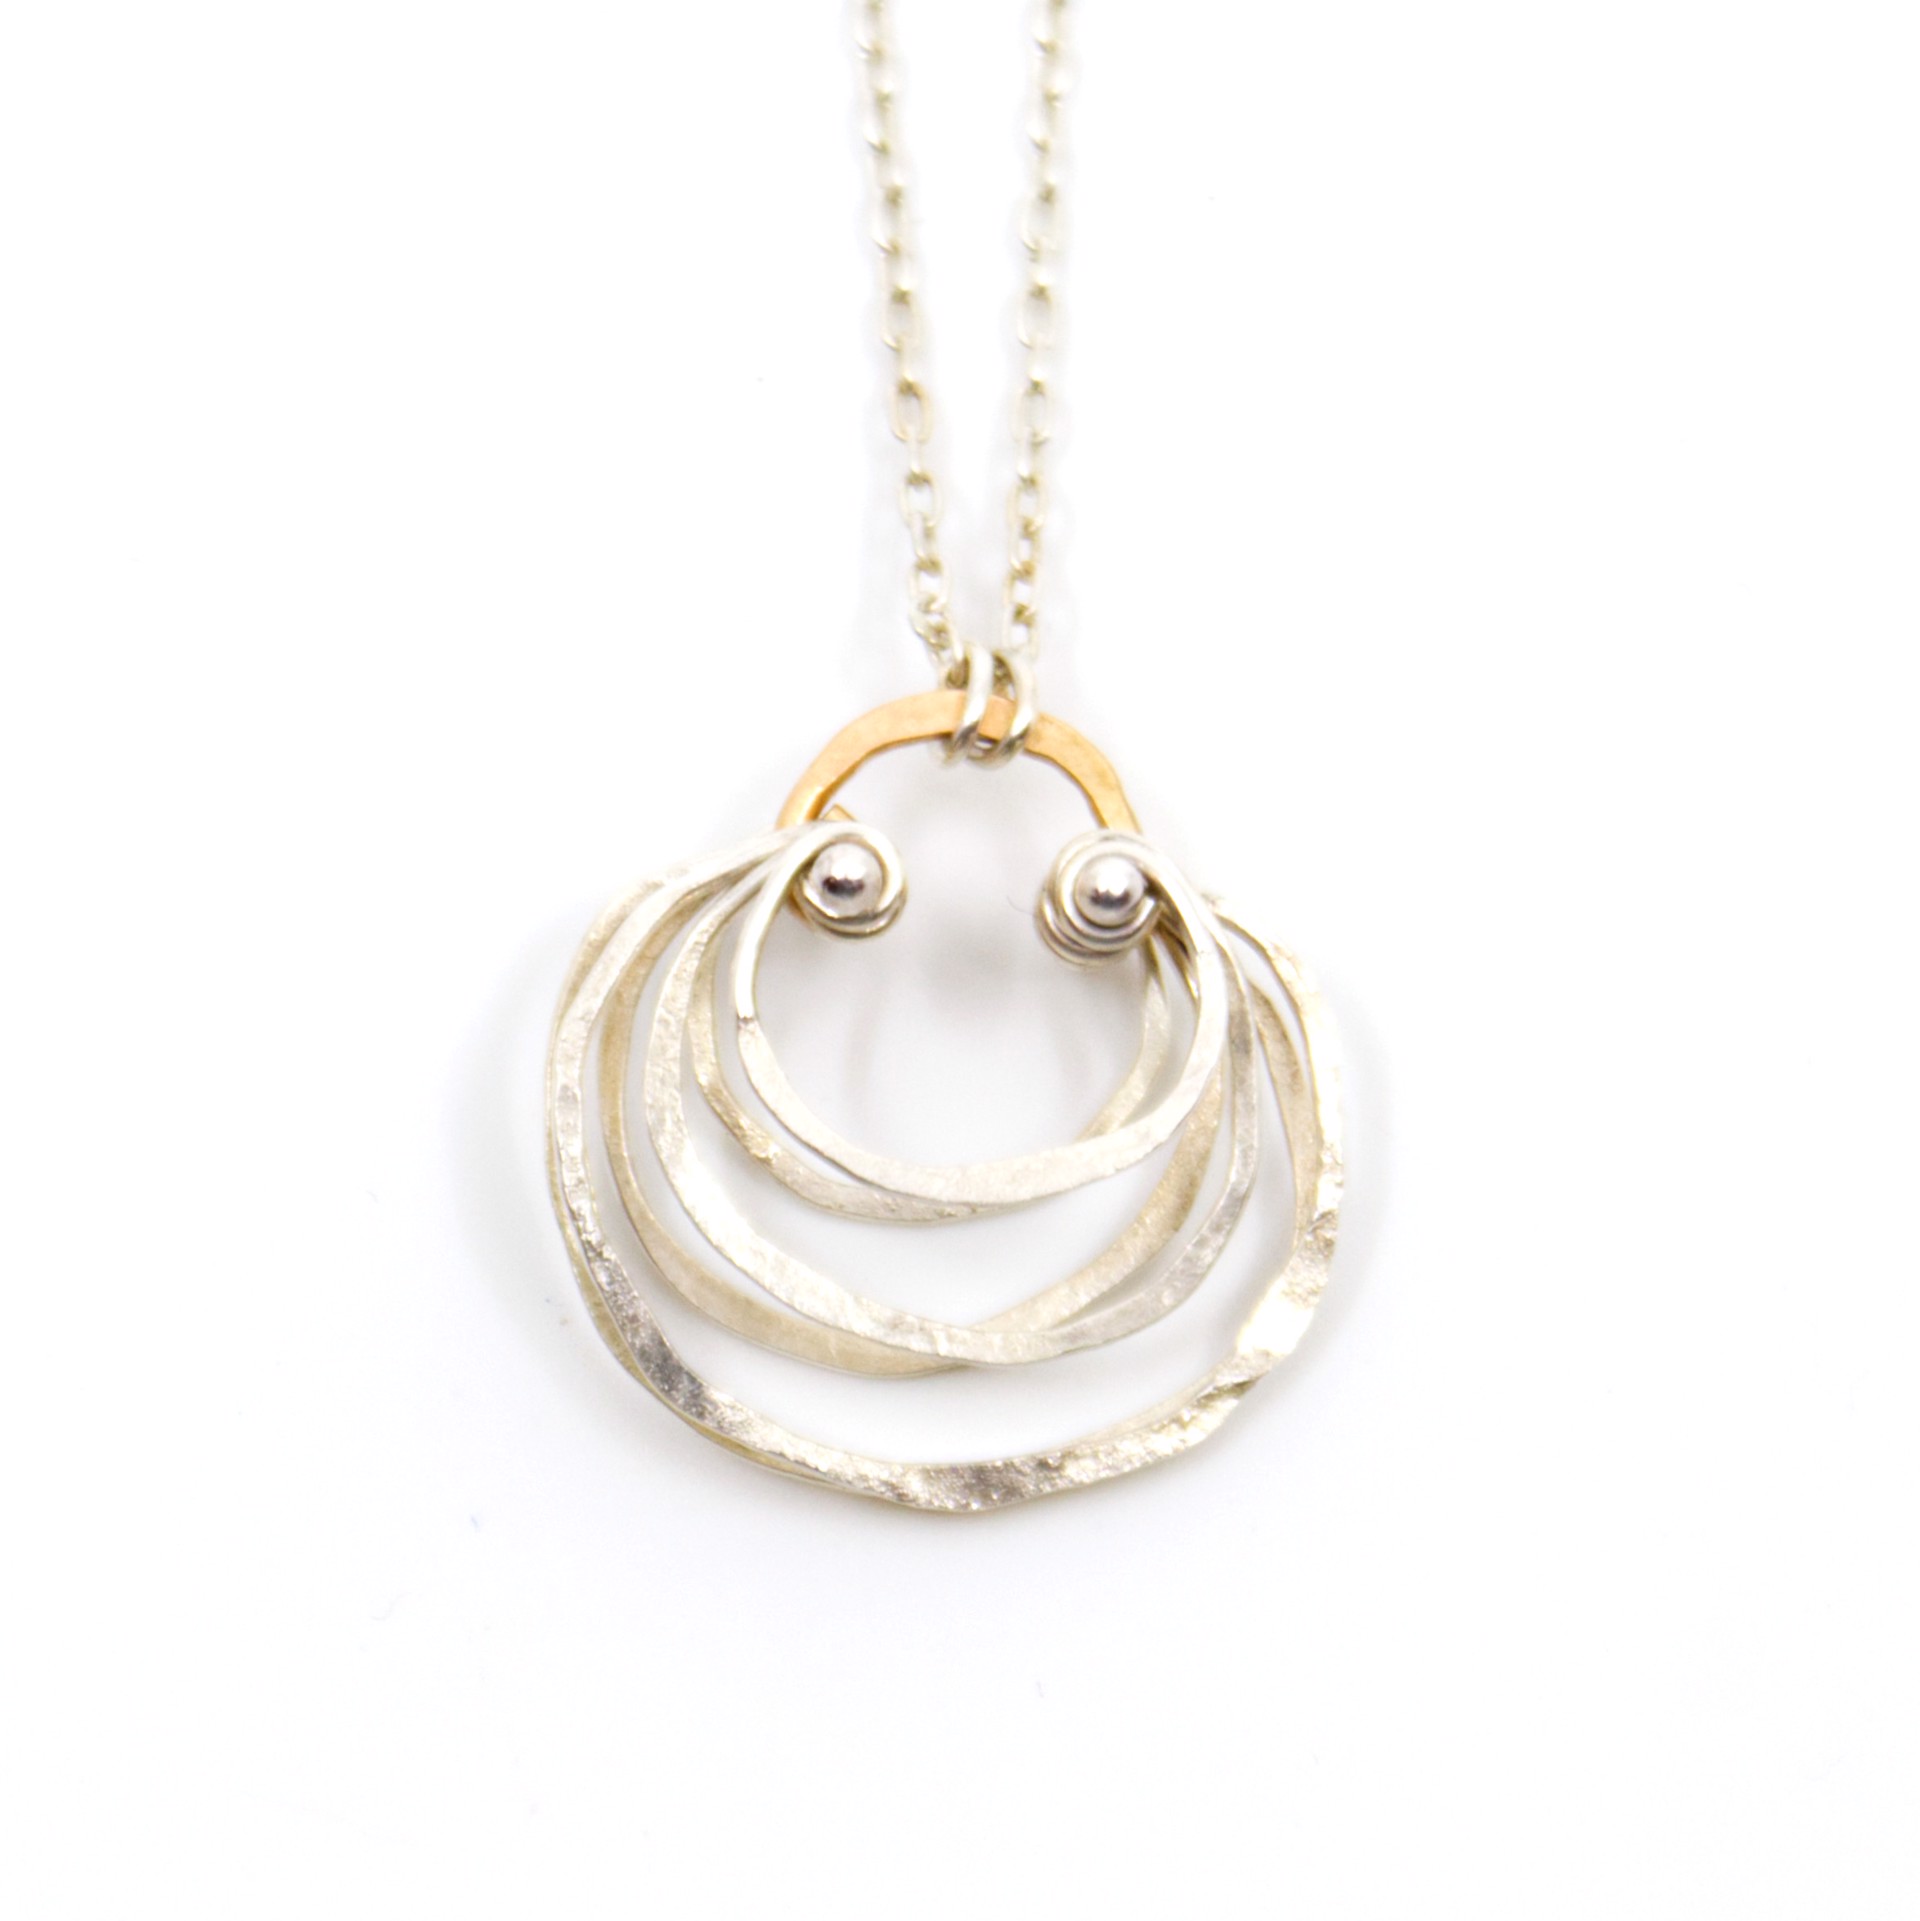 Micro Crescent Necklace by Leia Zumbro